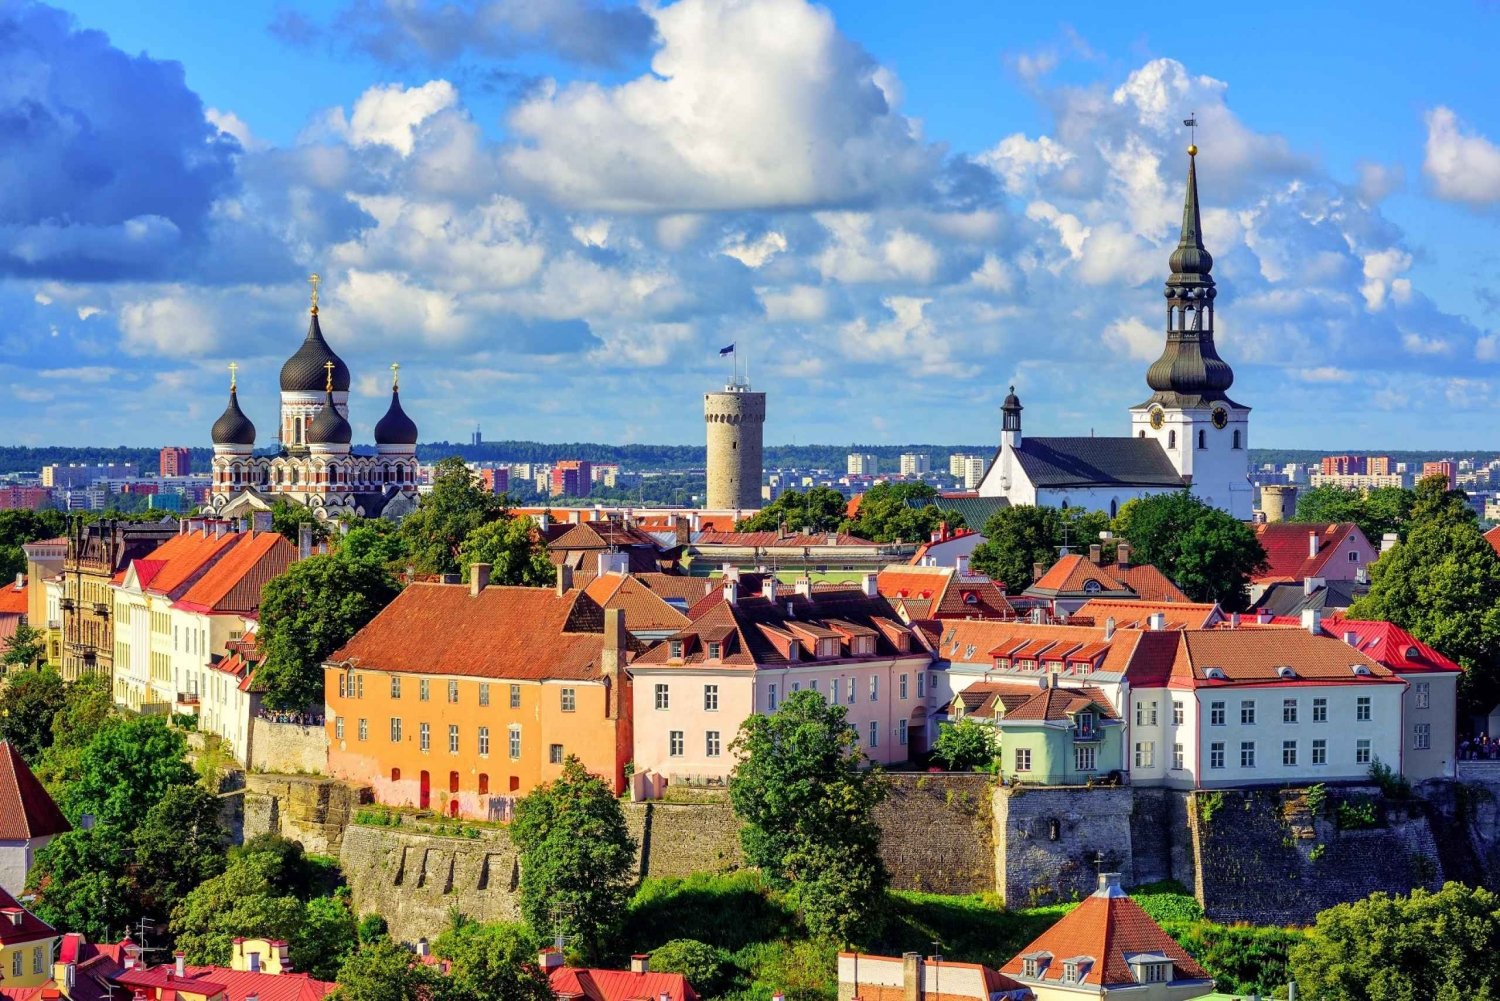 Berlin, Hamburg, Tallinn & Helsinki Cruise Ship Tour Package